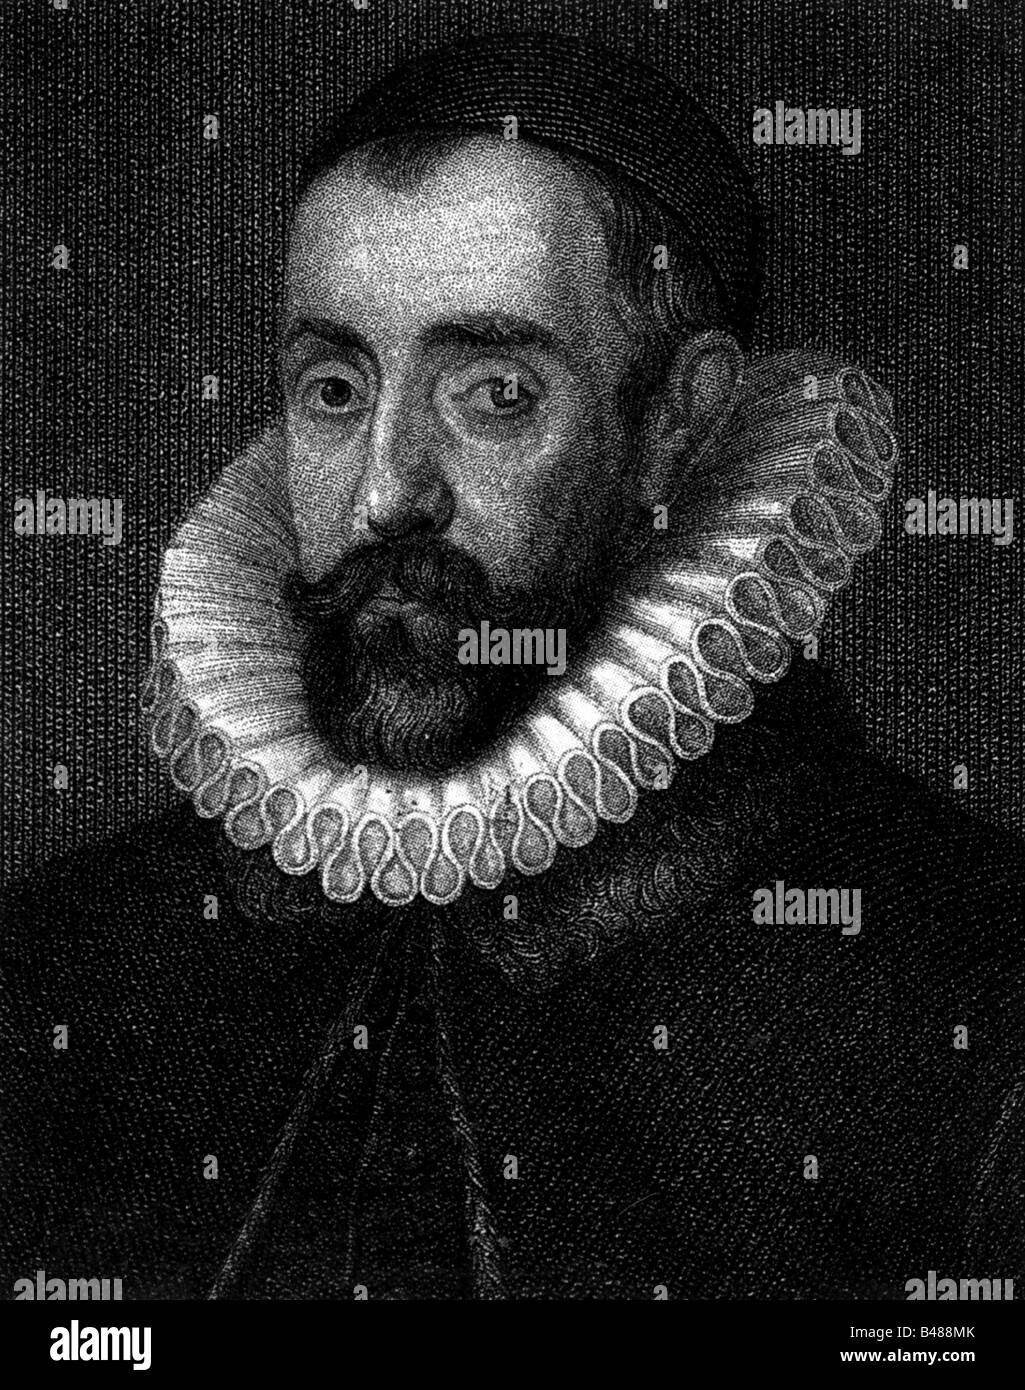 Walsingham, Francis, 1536 - 6.4.1590, English politician, portrait, wood engraving, 19th century, , Stock Photo